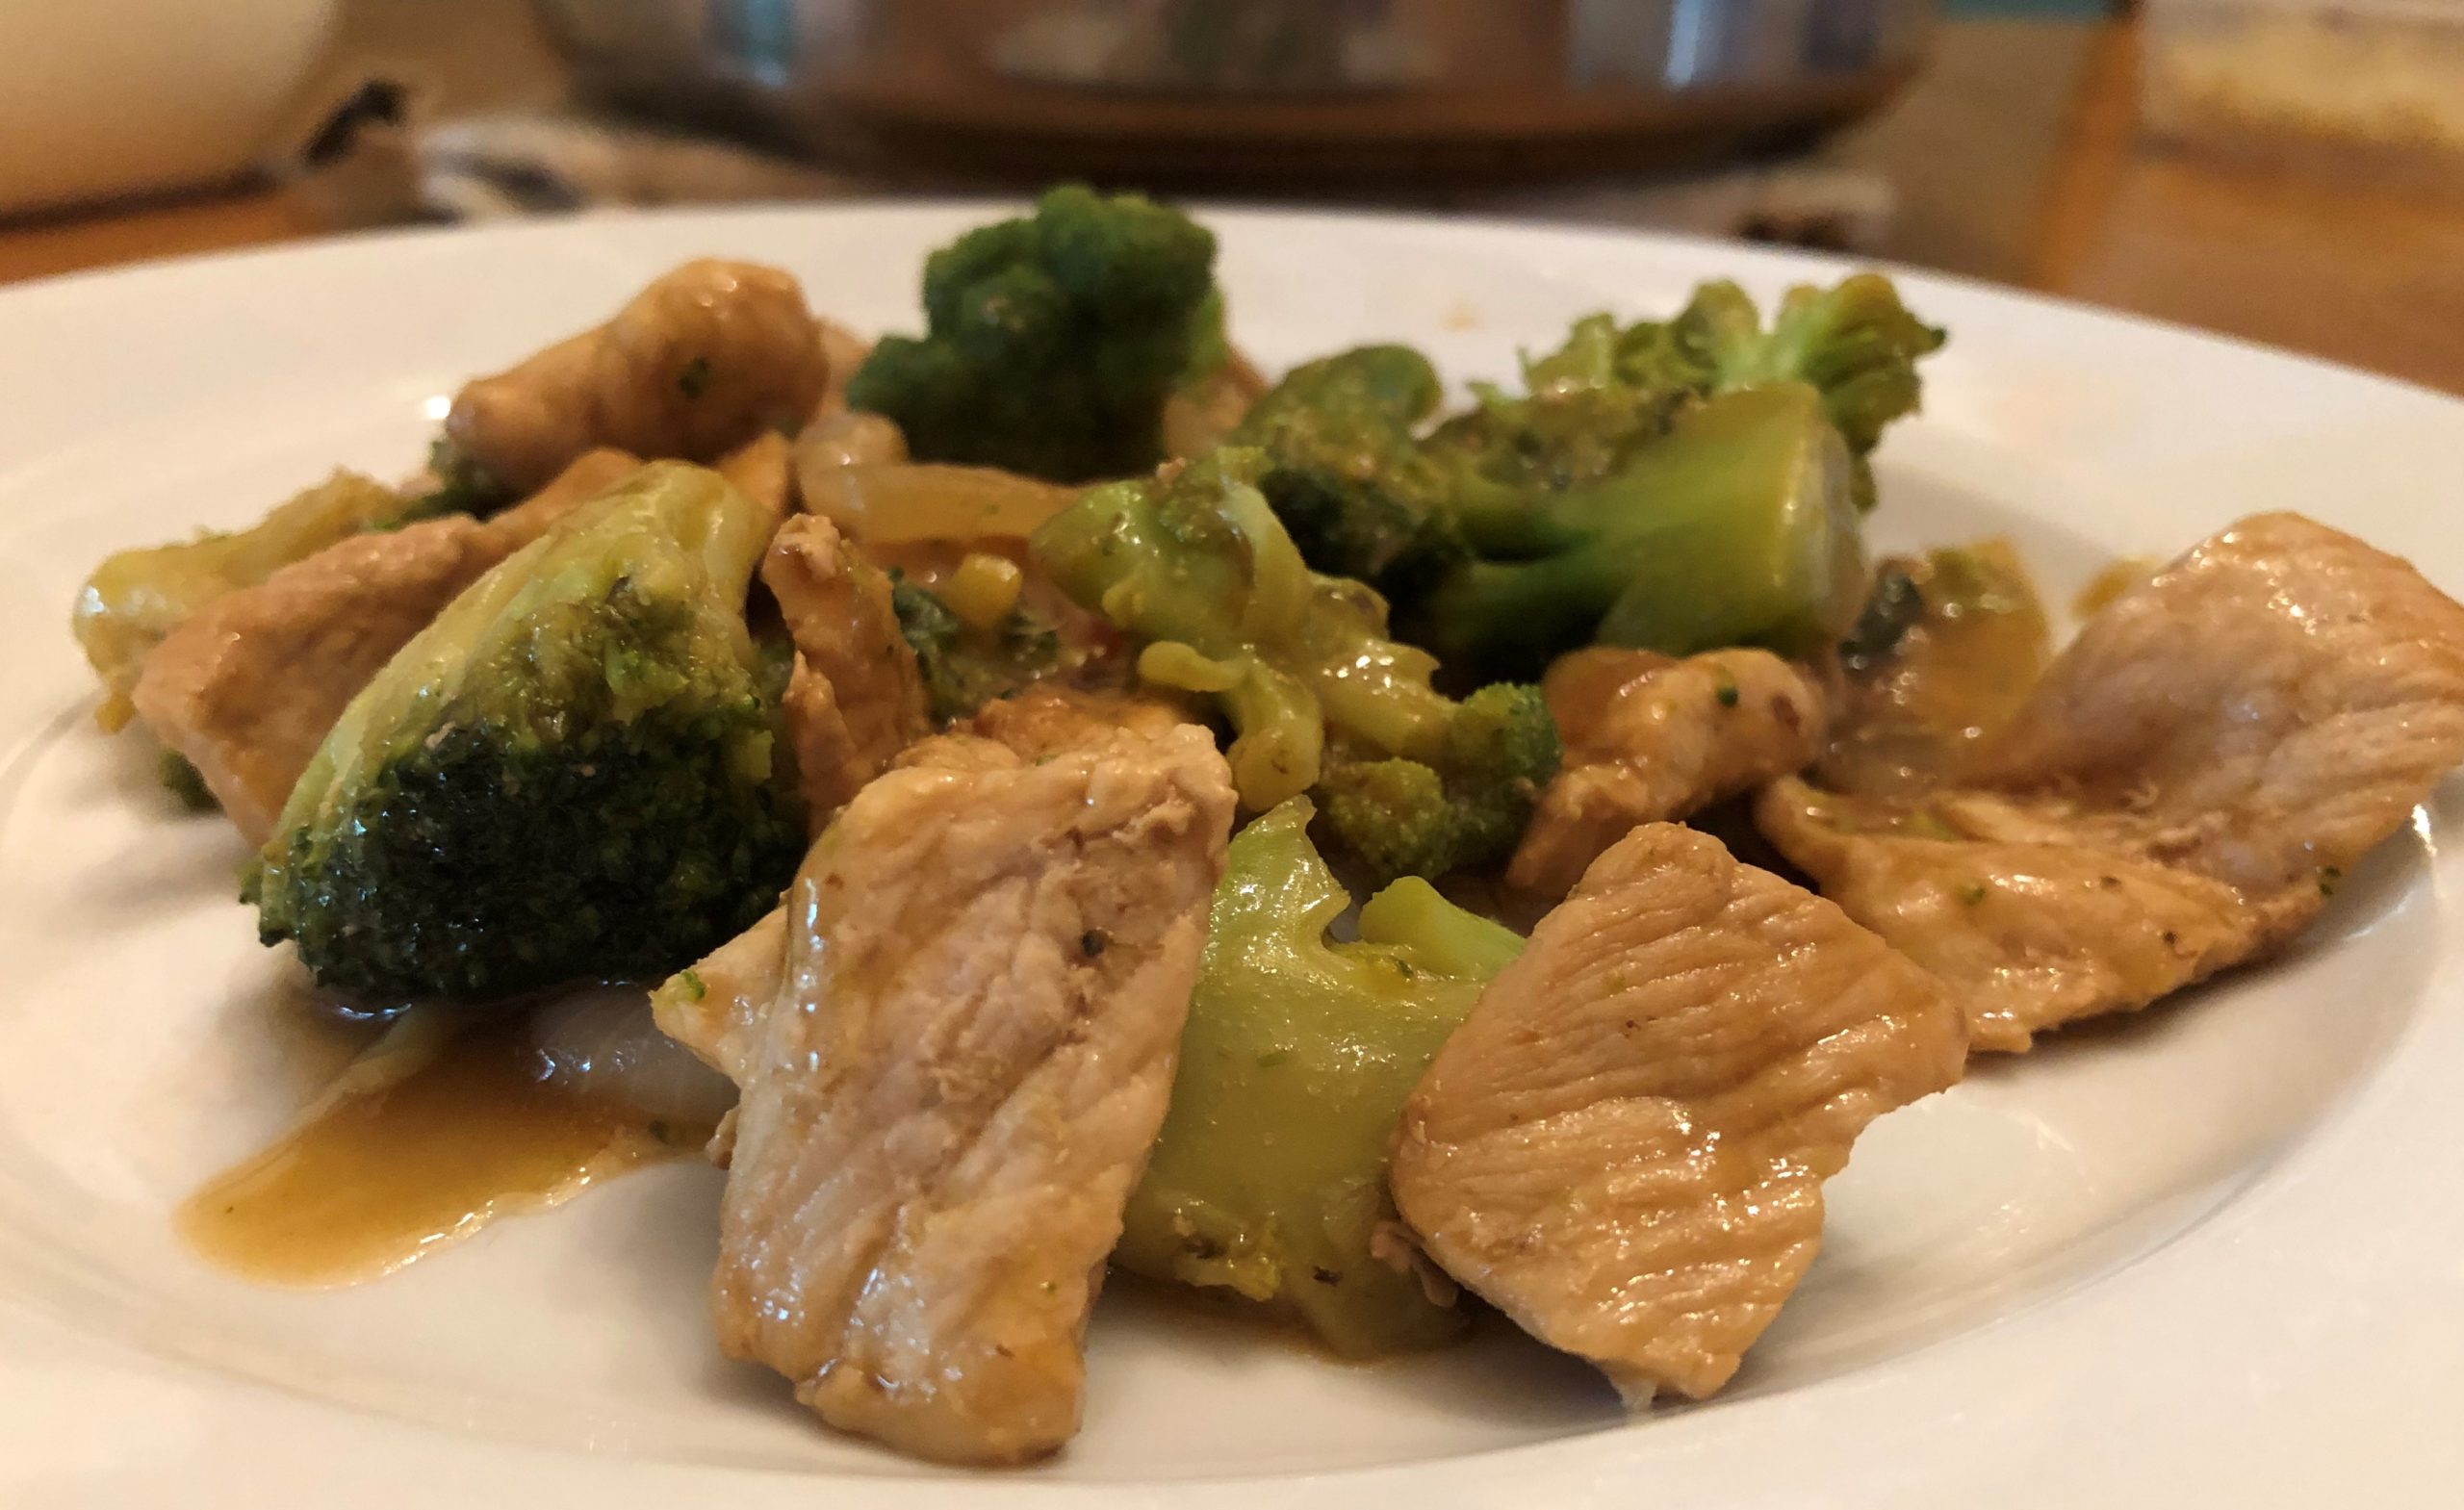 Pork and Broccoli Stir-Fry